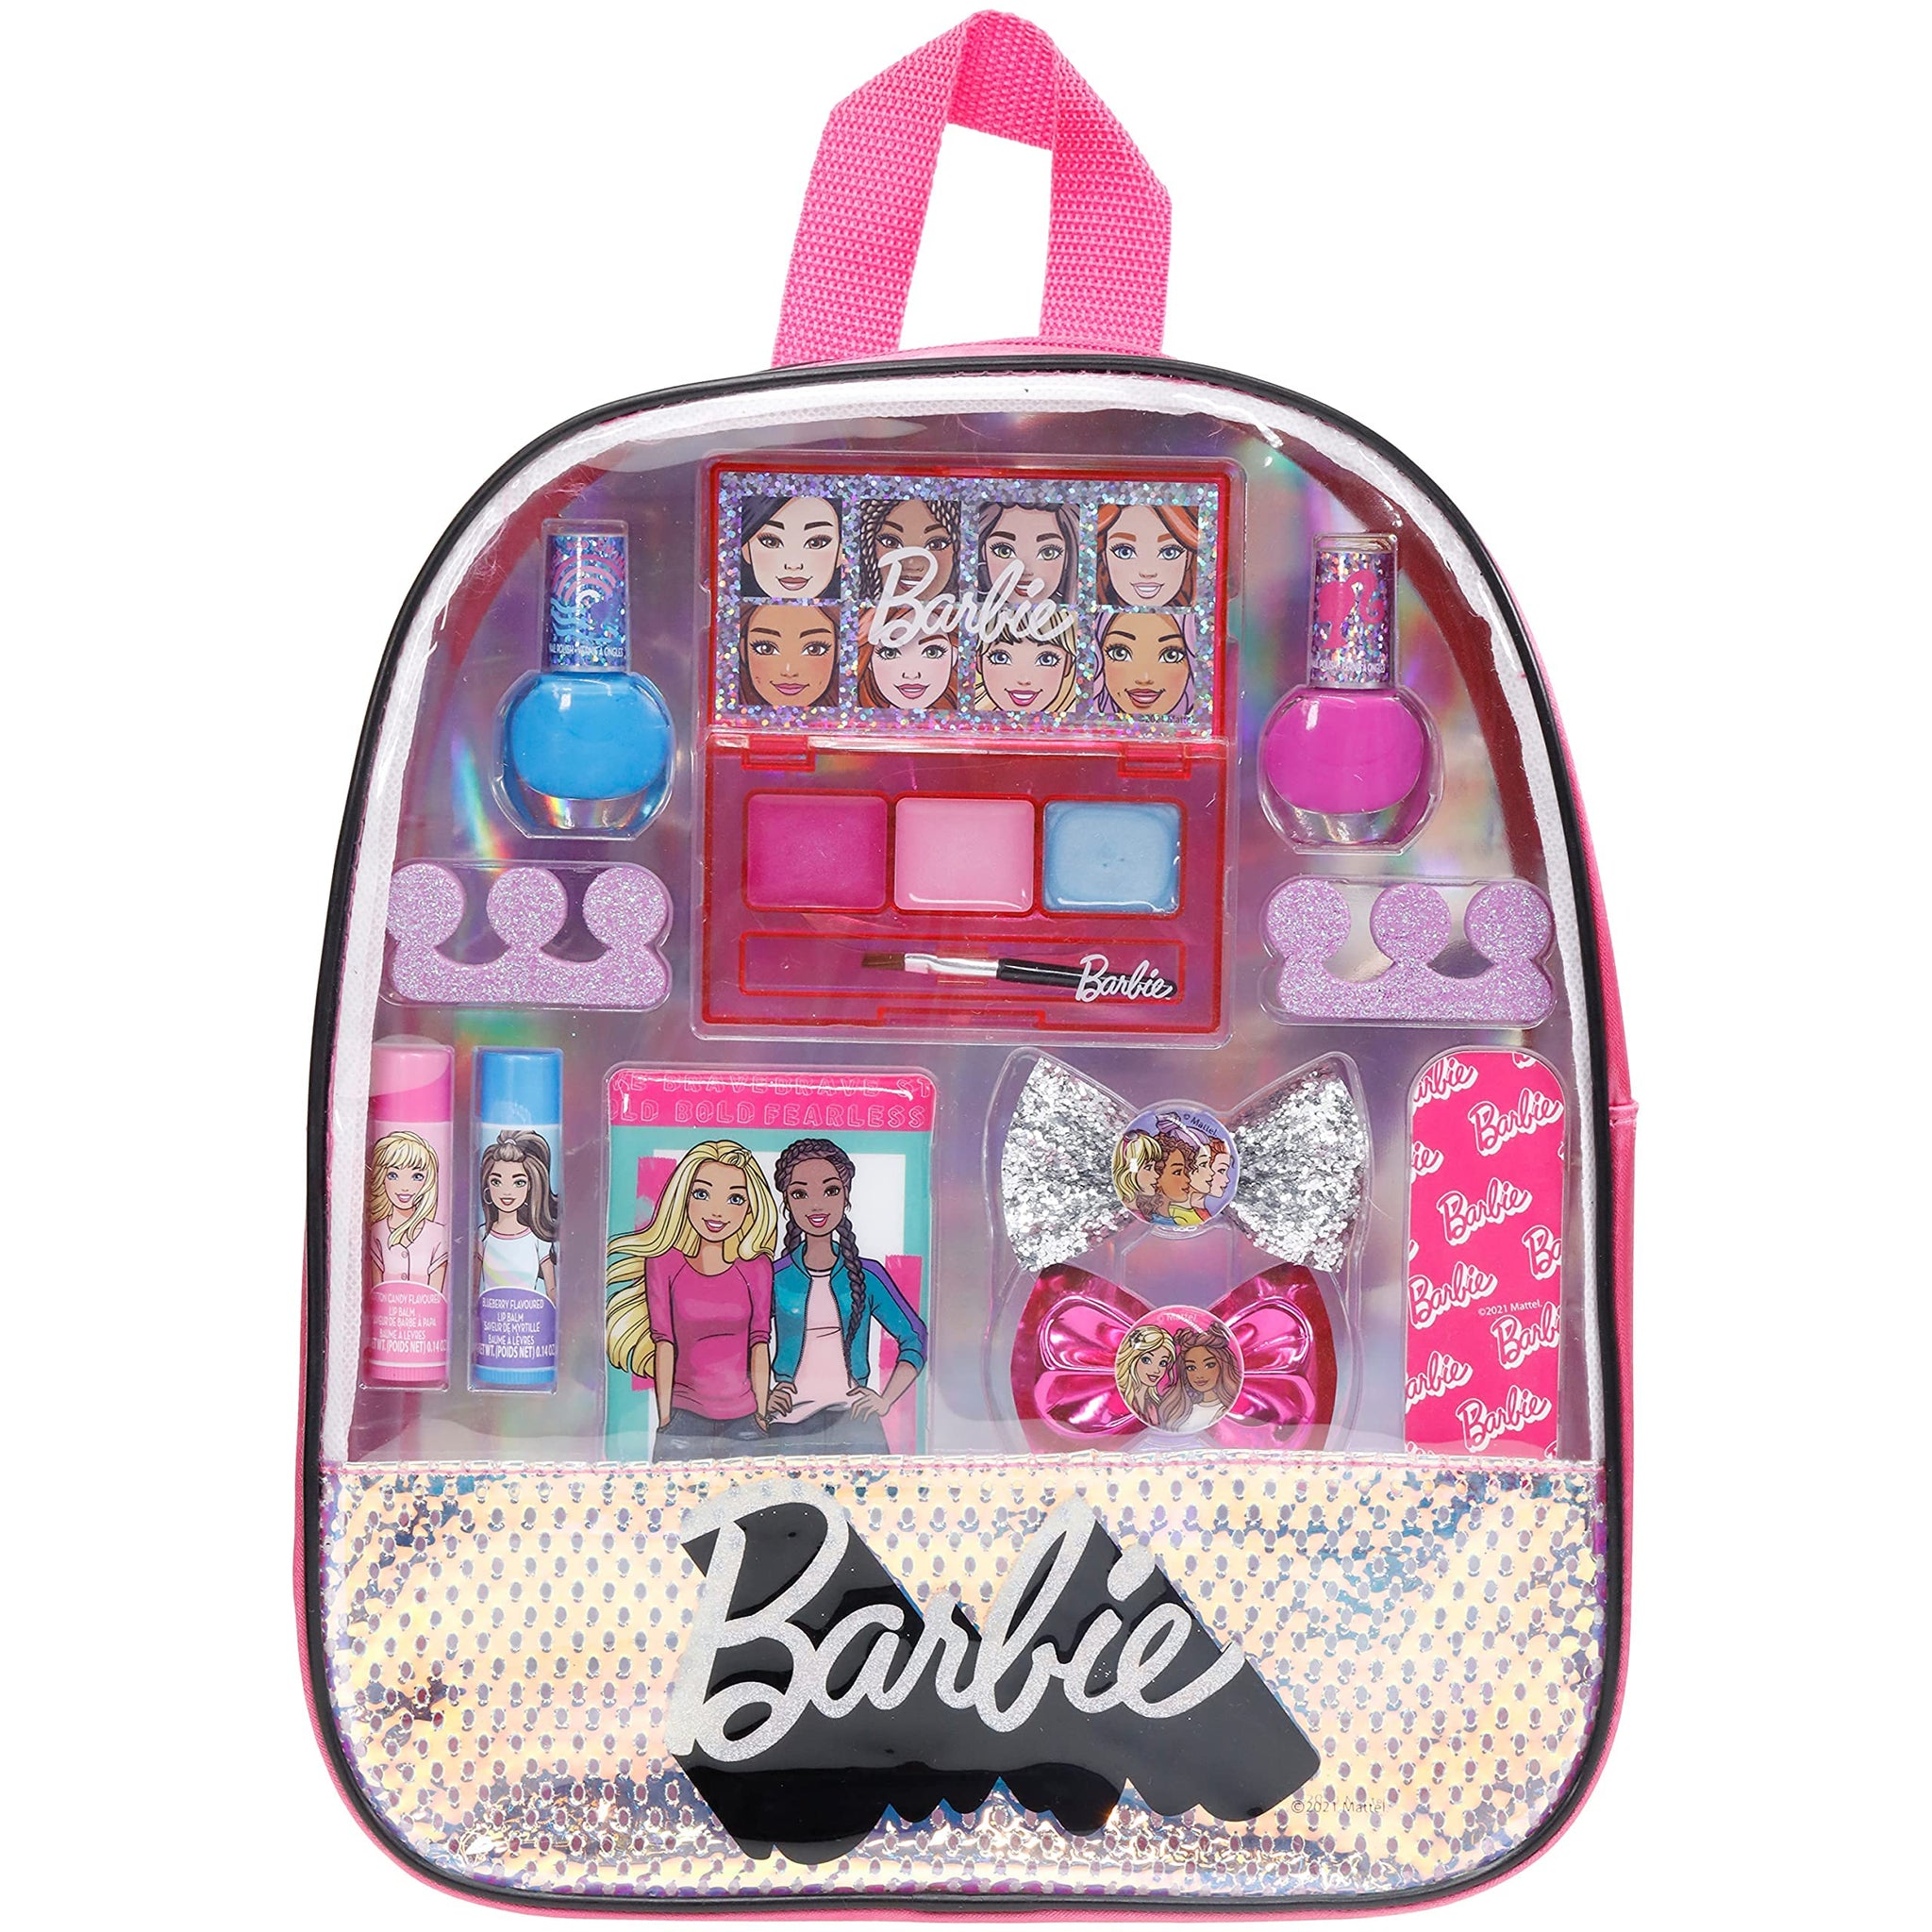 Barbie - Townley Girl Hair Accessories Kit, Gift Set for Kids Girls